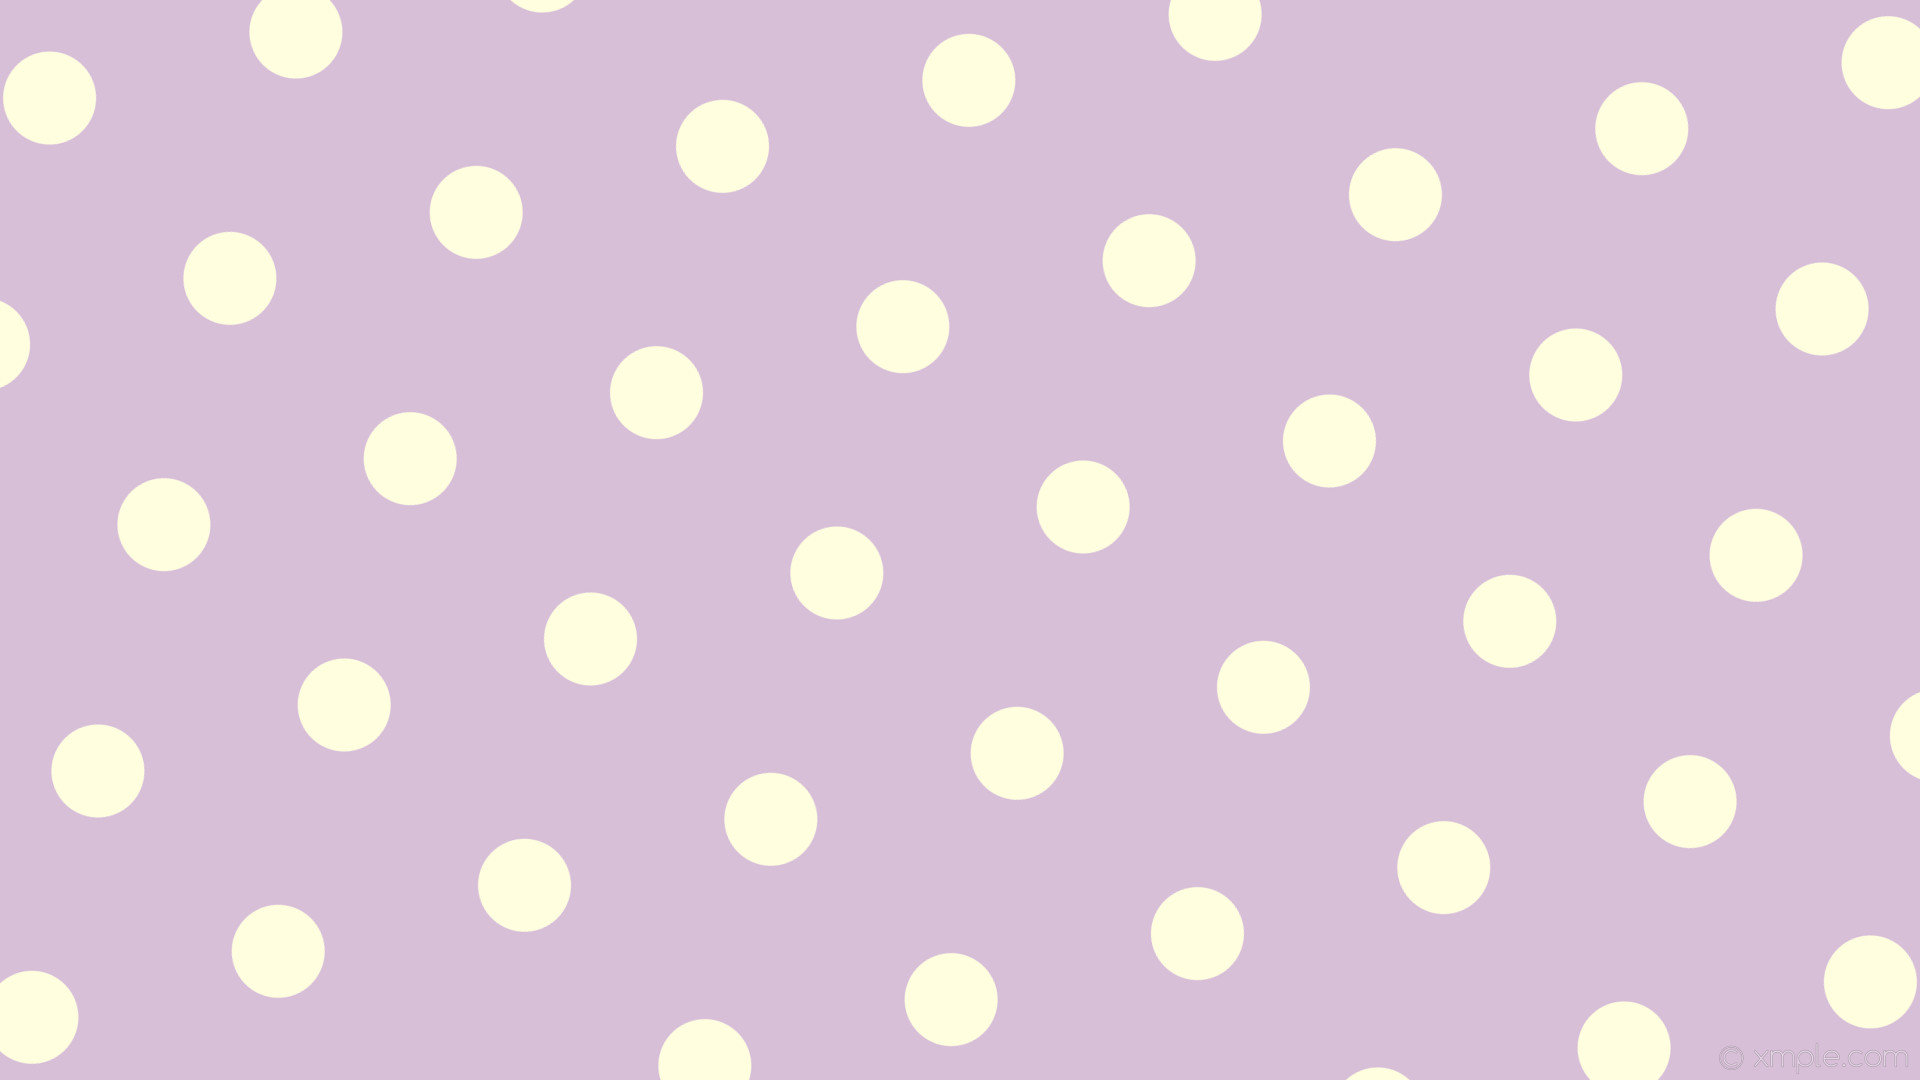 1920x1080 wallpaper yellow hexagon purple polka dots thistle light yellow #d8bfd8  #ffffe0 diagonal 15Â°